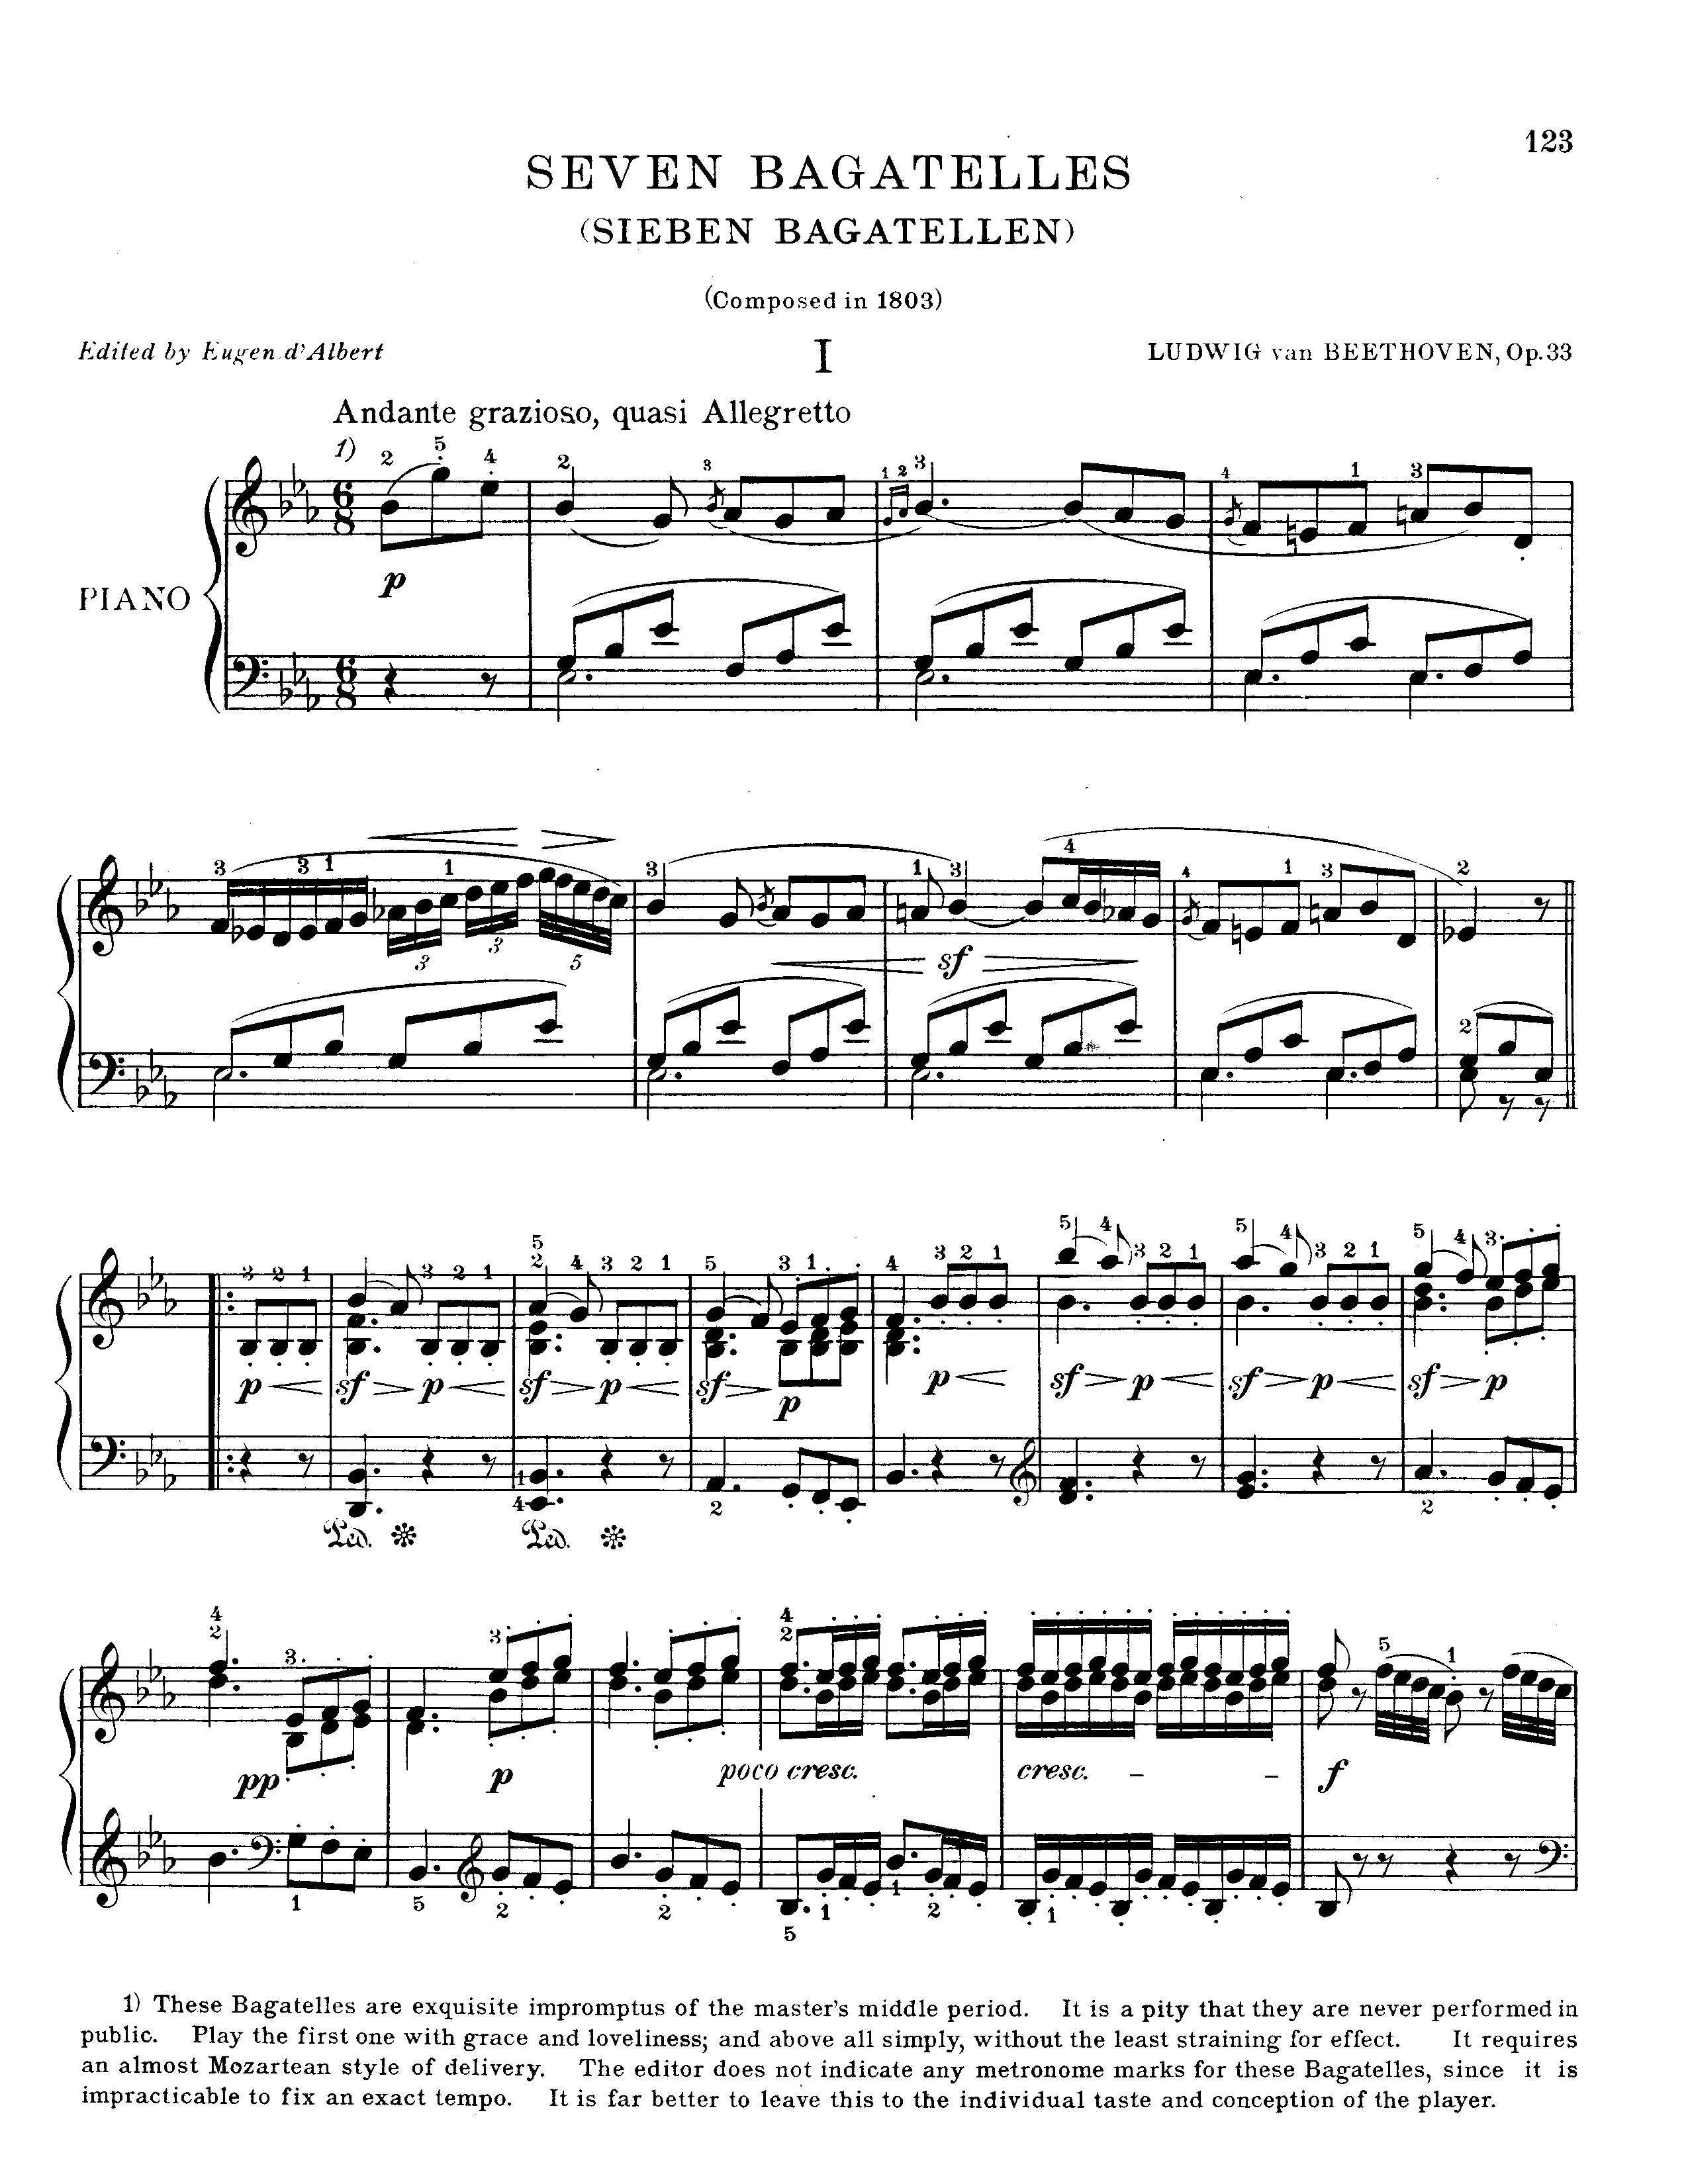 Bagatelles Op. 33 Score